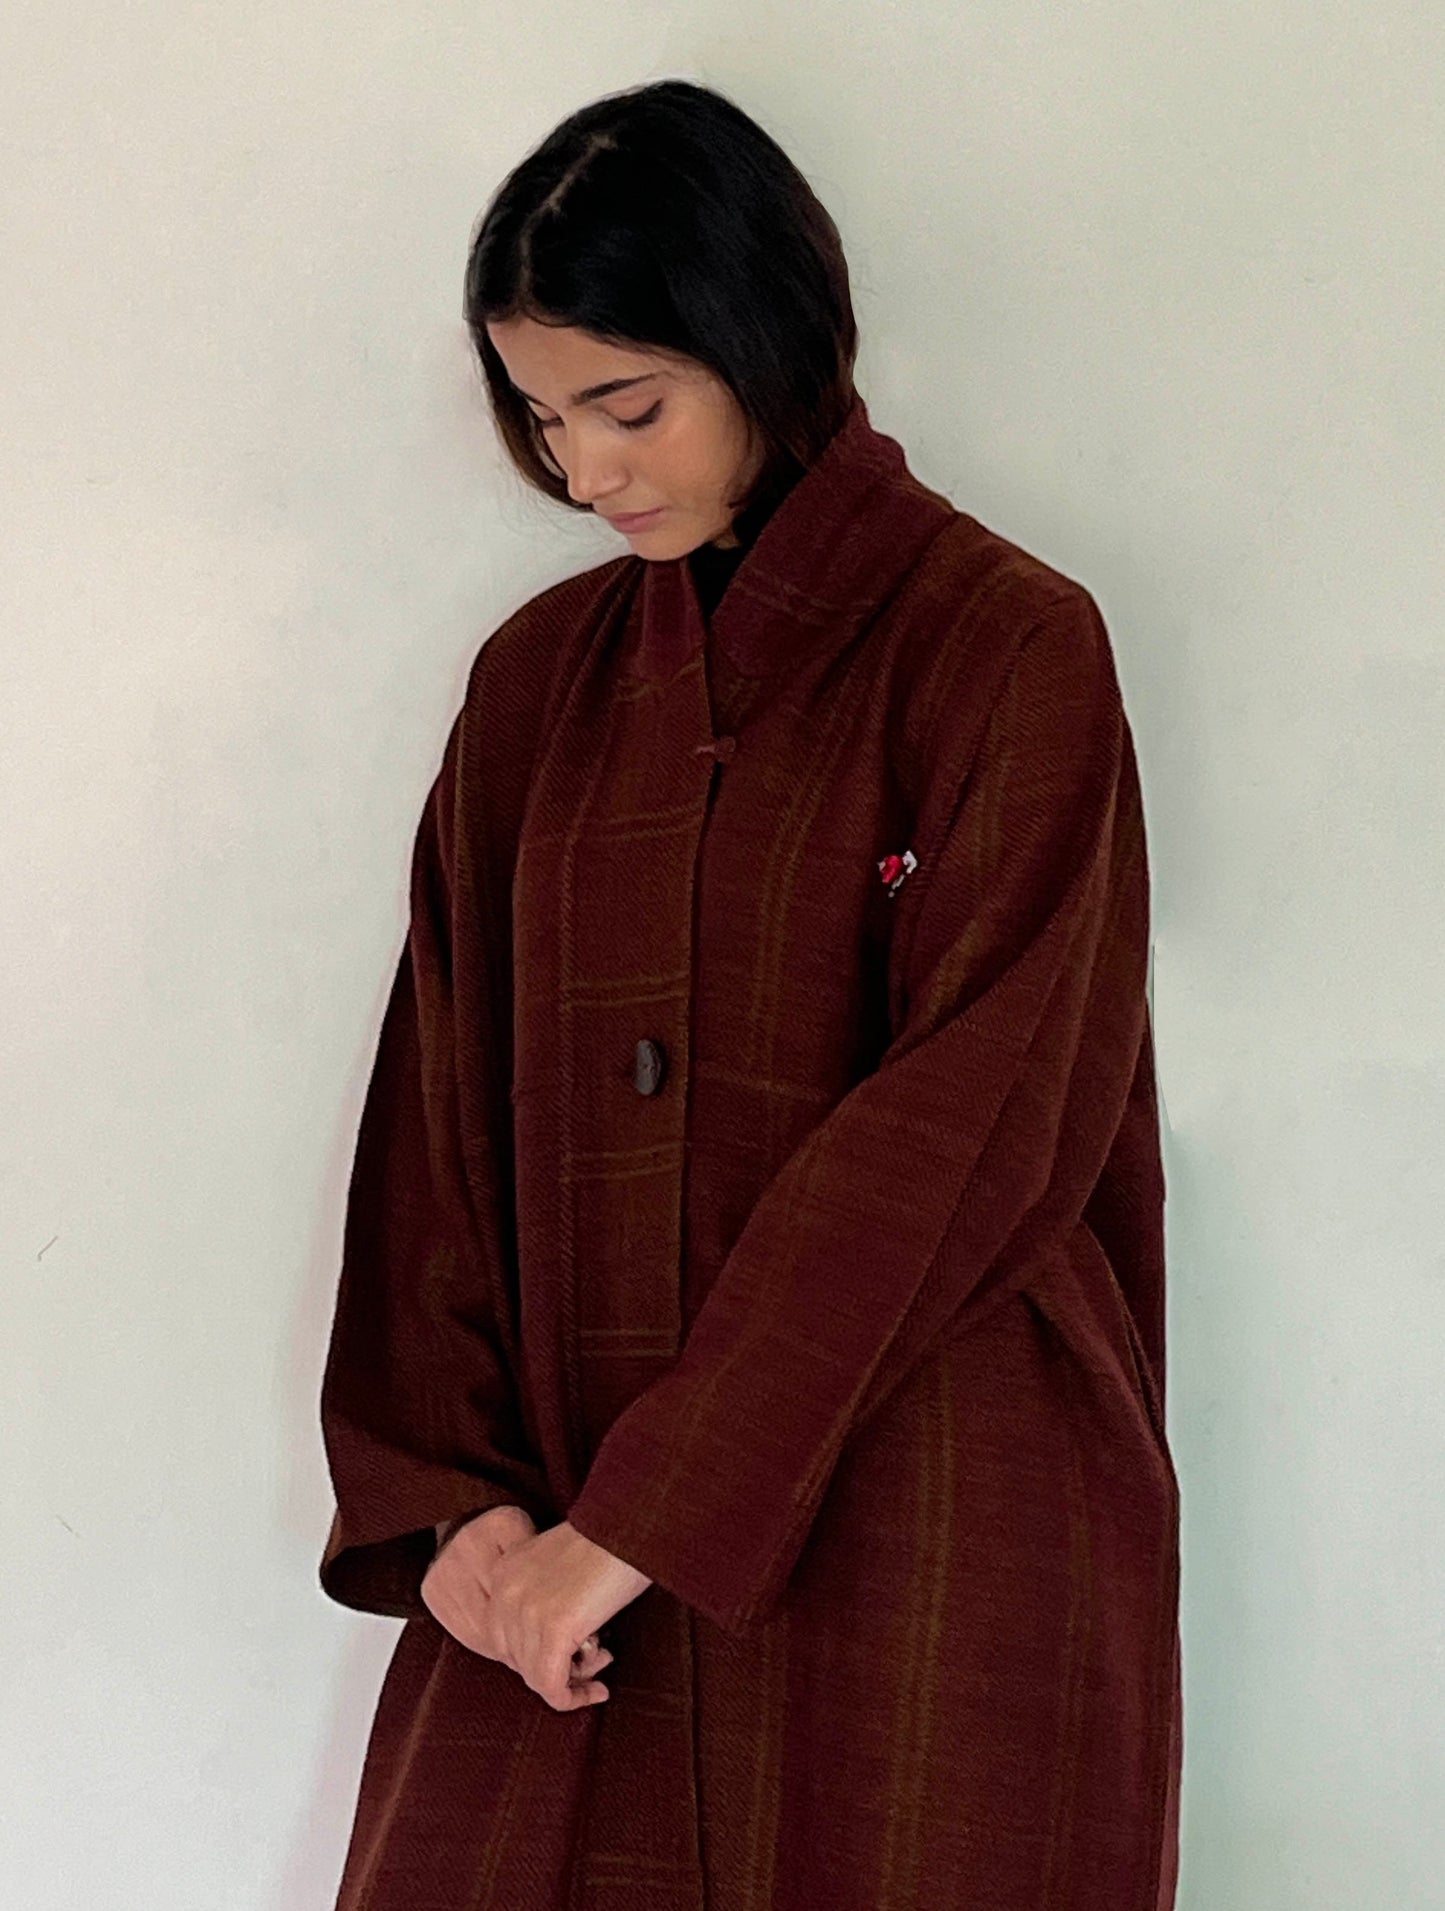 earth red hand woven merino wool long jacket. このロングジャケットは、手織りのメリノウールで作られています。